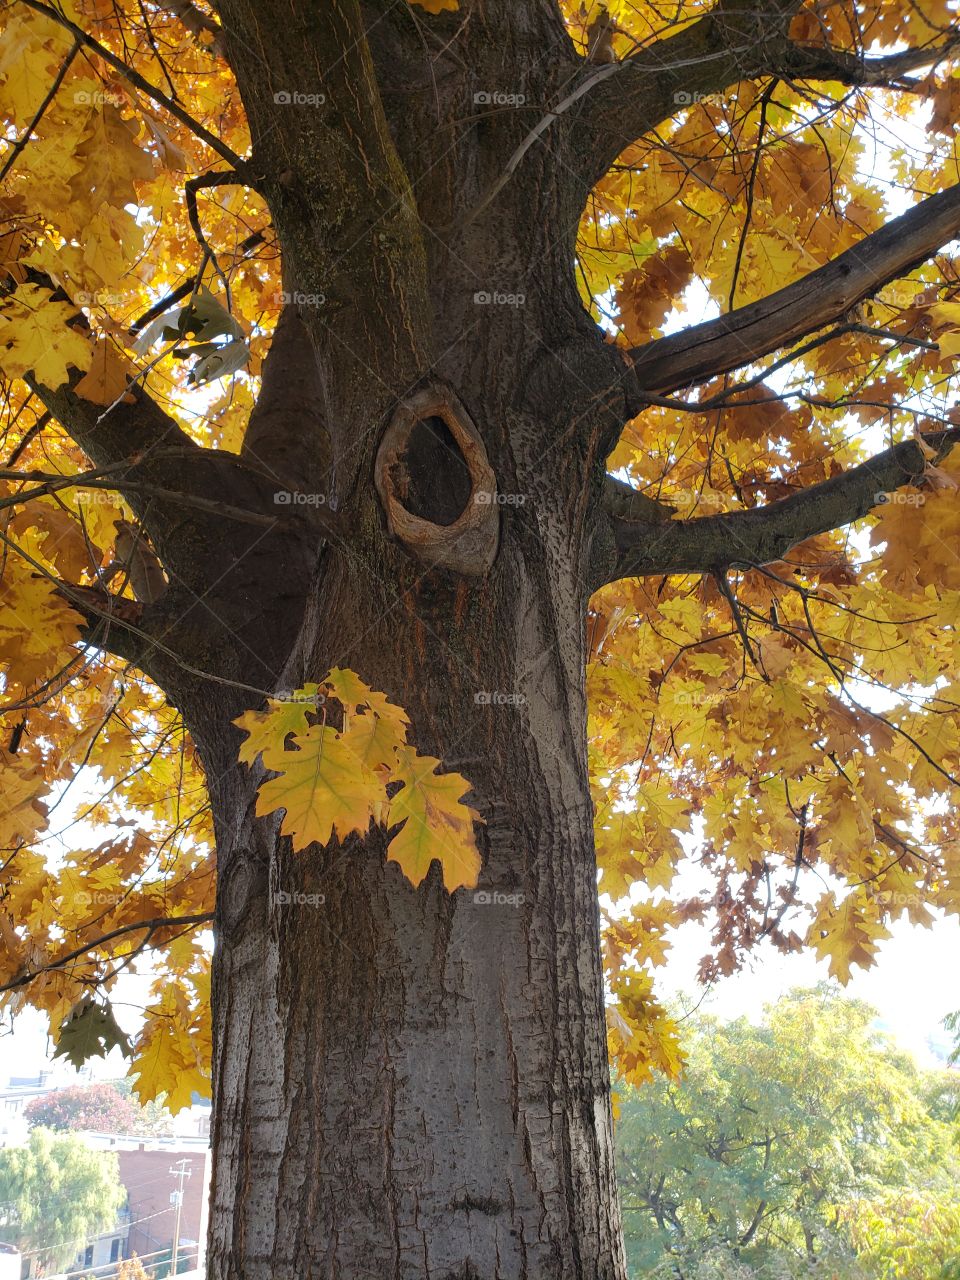 tree in autumn glory